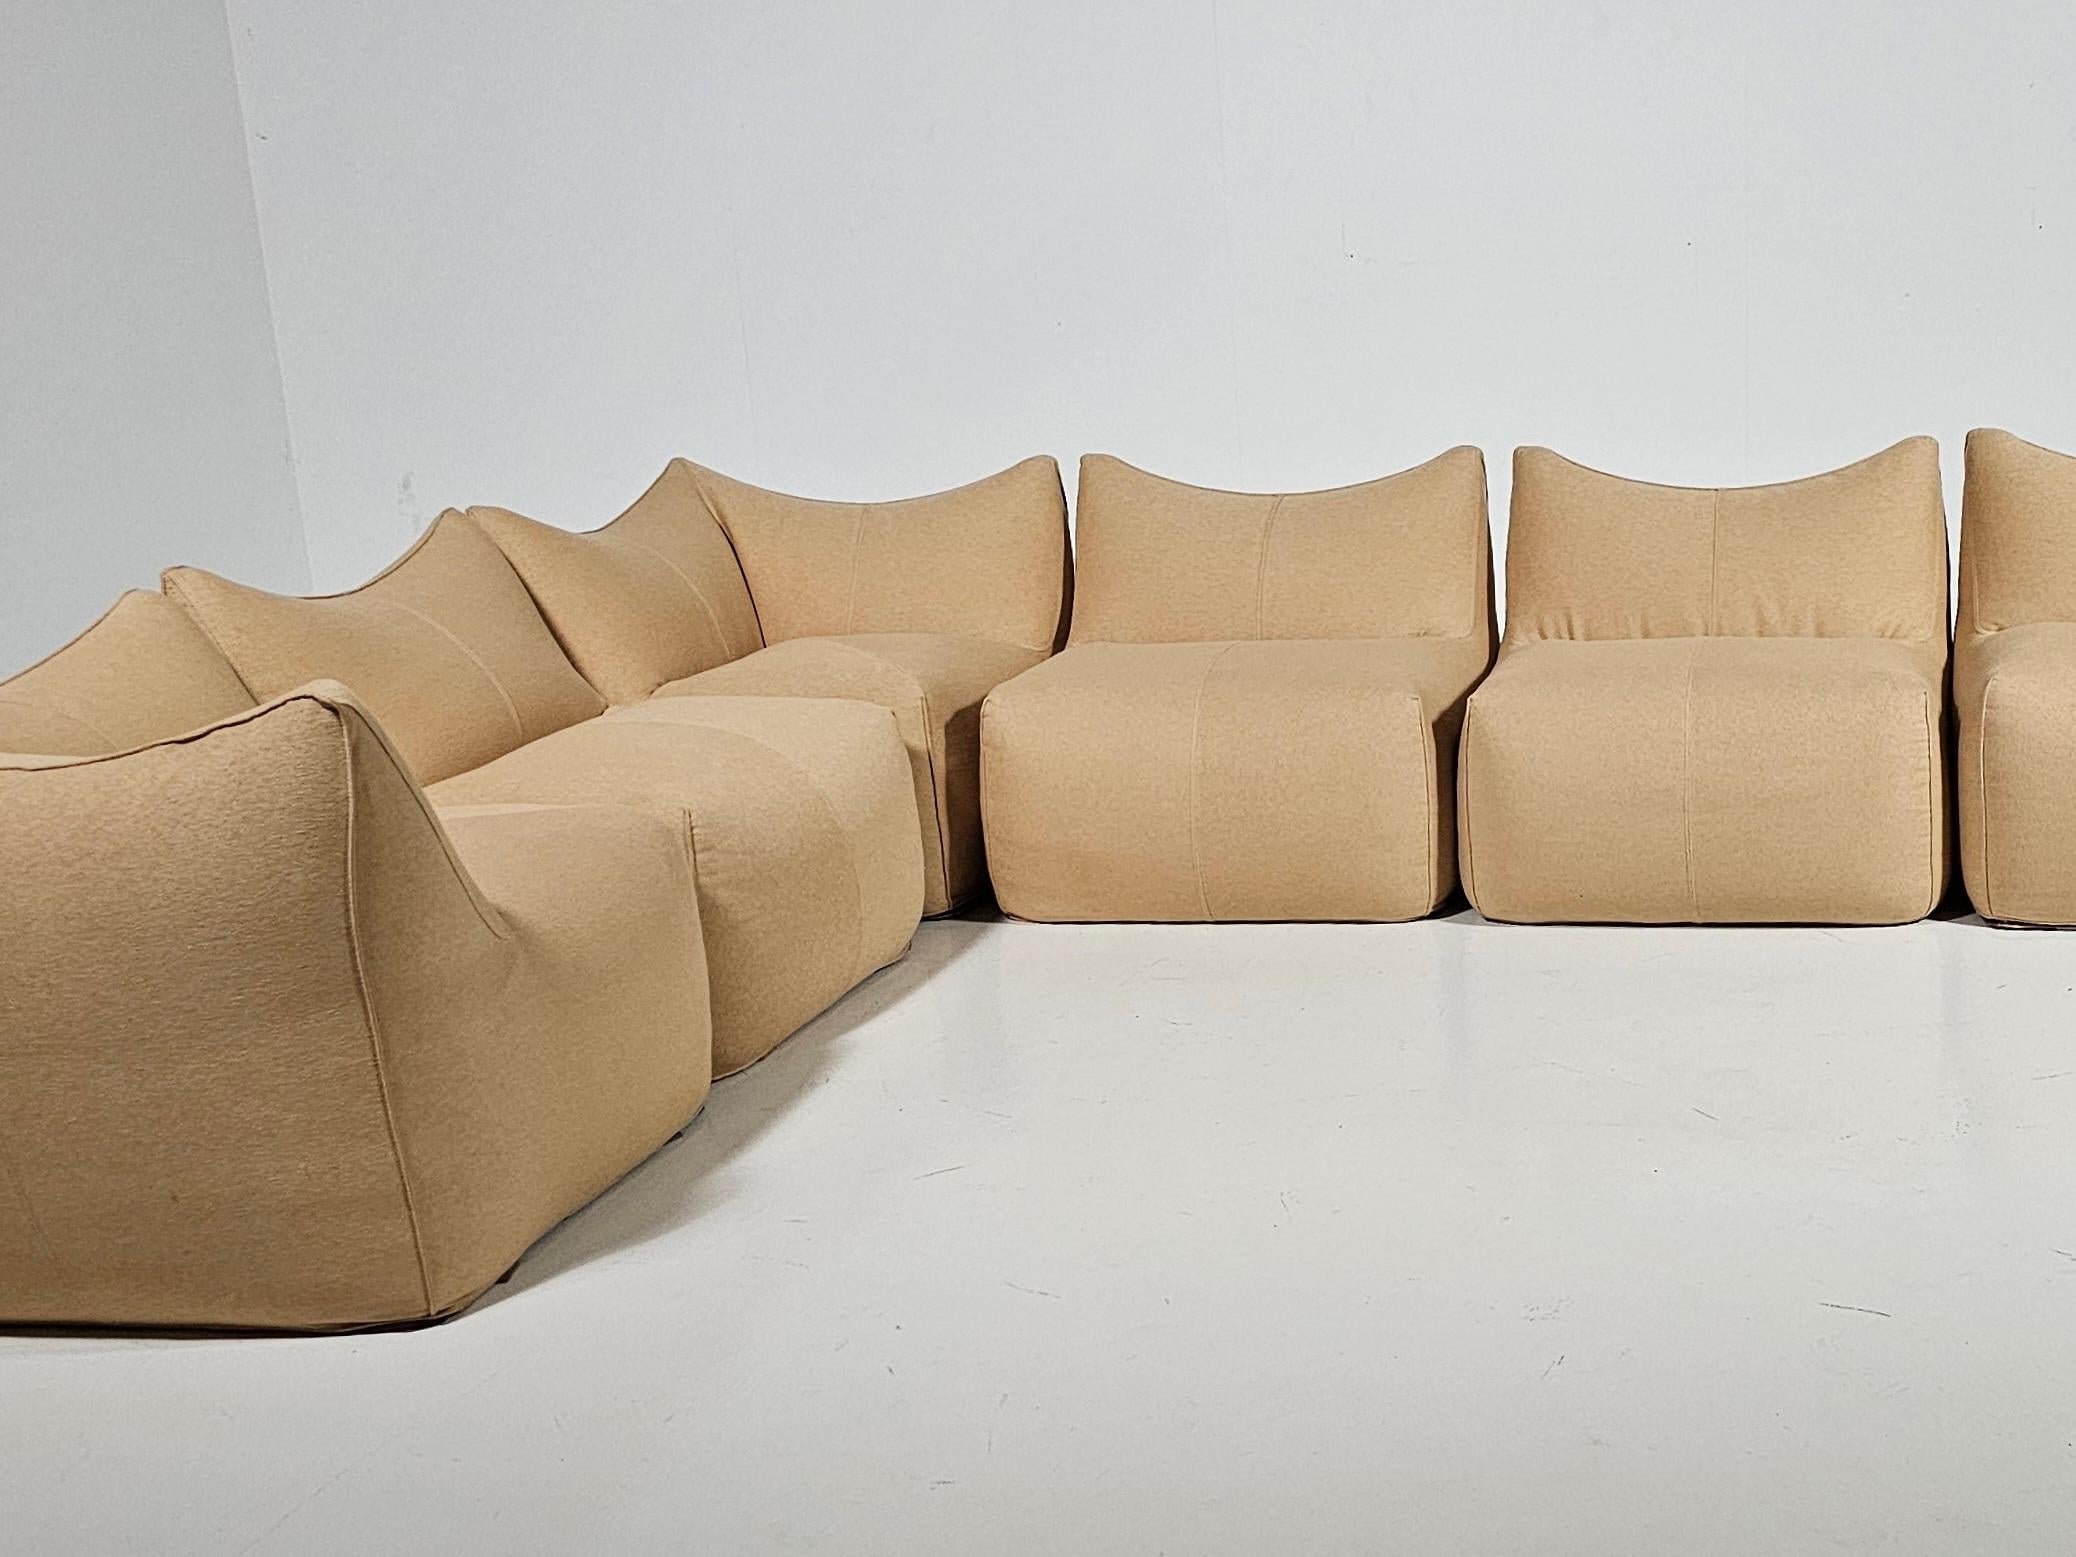 Late 20th Century Le Bambole sand color Sectional Sofa by Mario Bellni for B&B Italia, 1970s For Sale